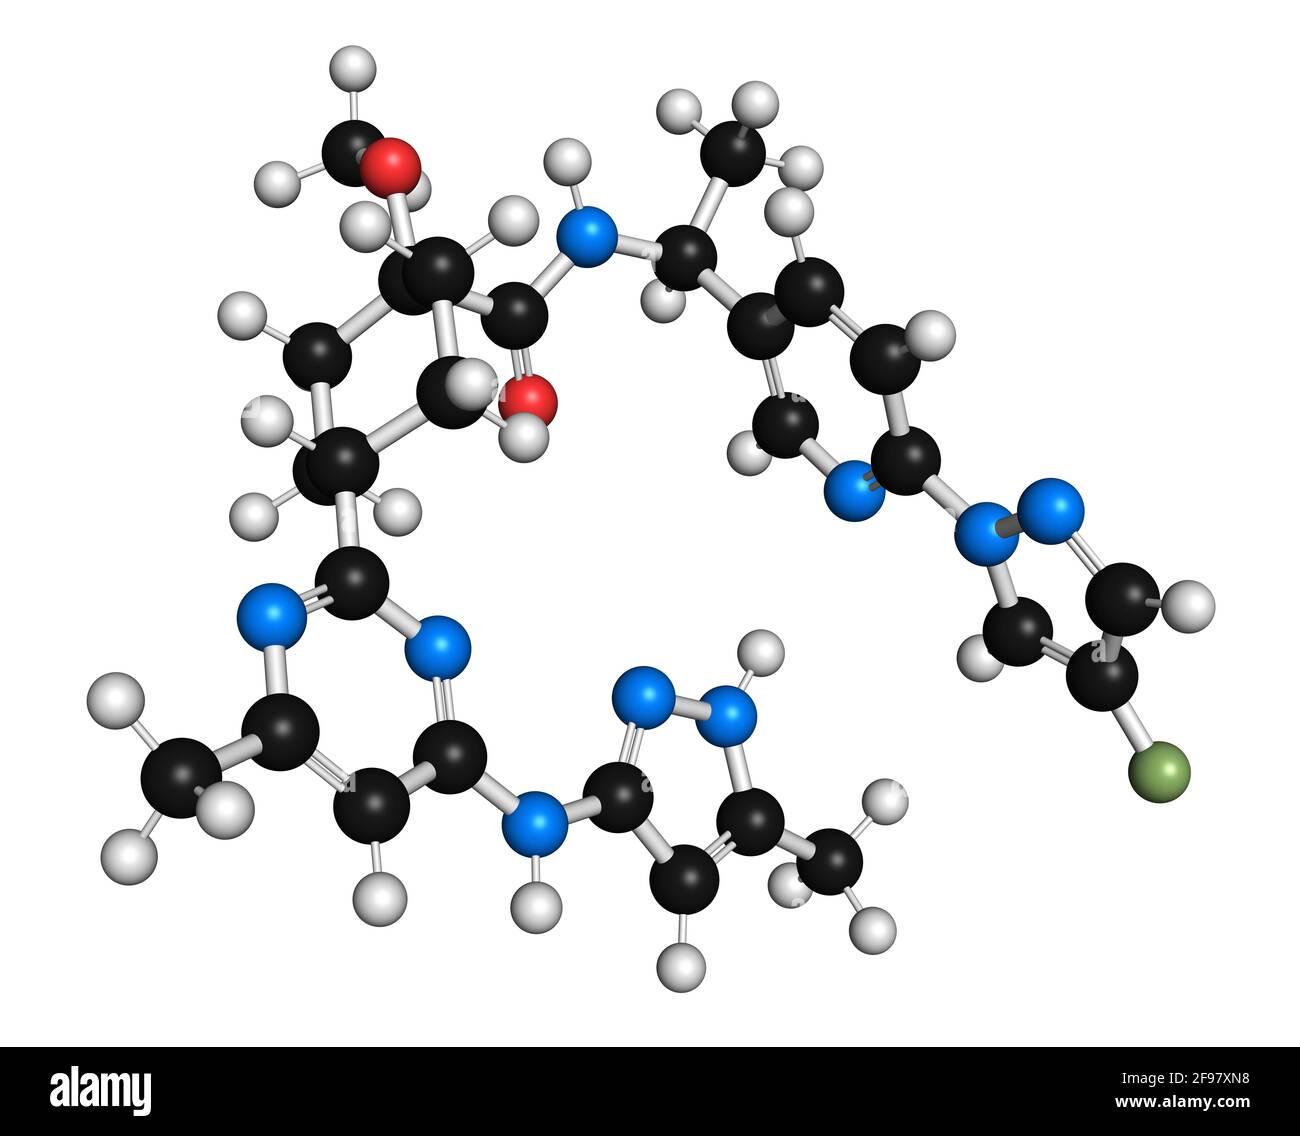 Pralsetinib cancer drug molecule, illustration Stock Photo